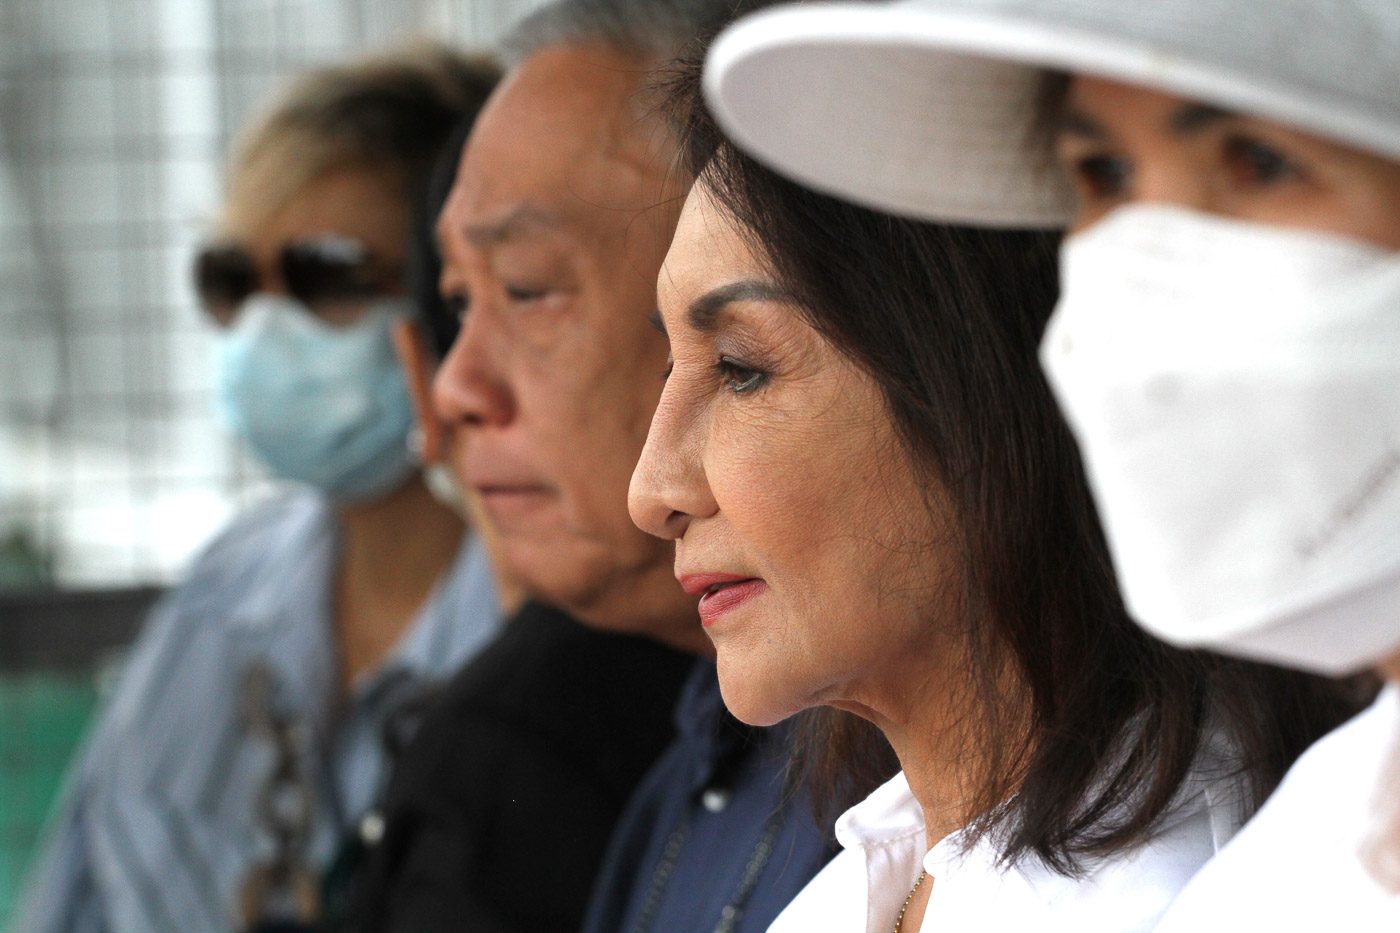 Cebu: 10 years after her suspension, even former enemies unite behind Gwen